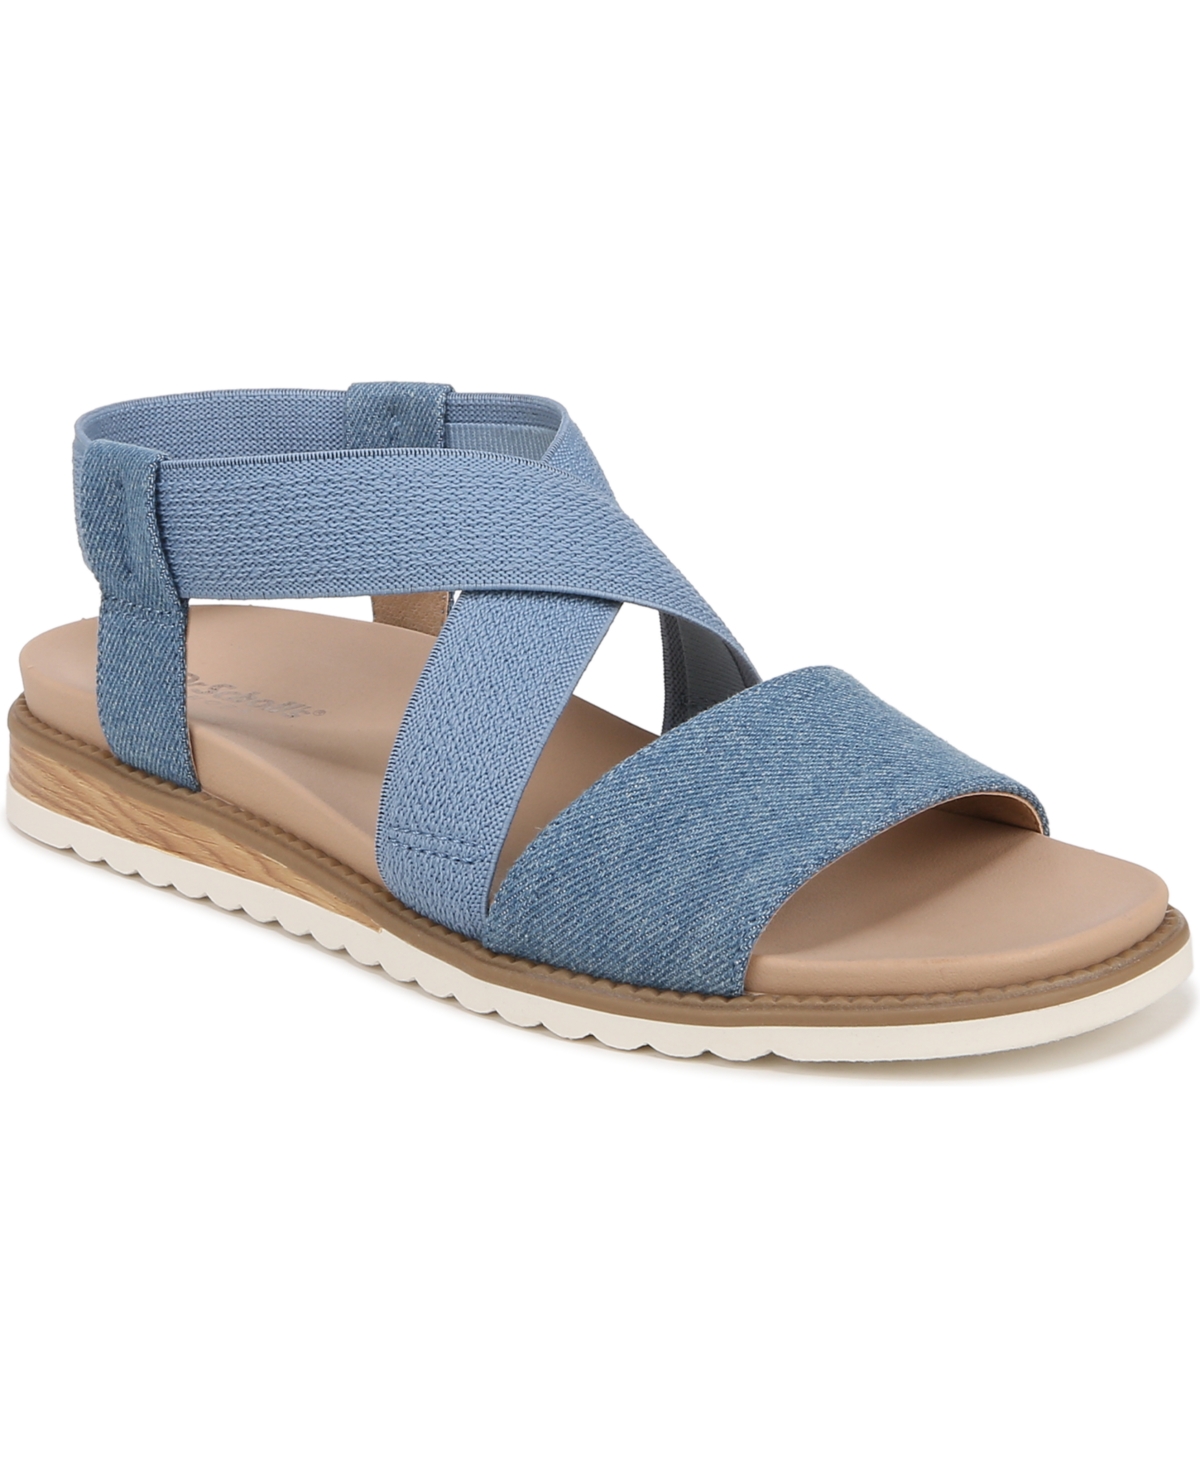 Dr. Scholl's Women's Islander Ankle Strap Sandals In Blue Denim Fabric